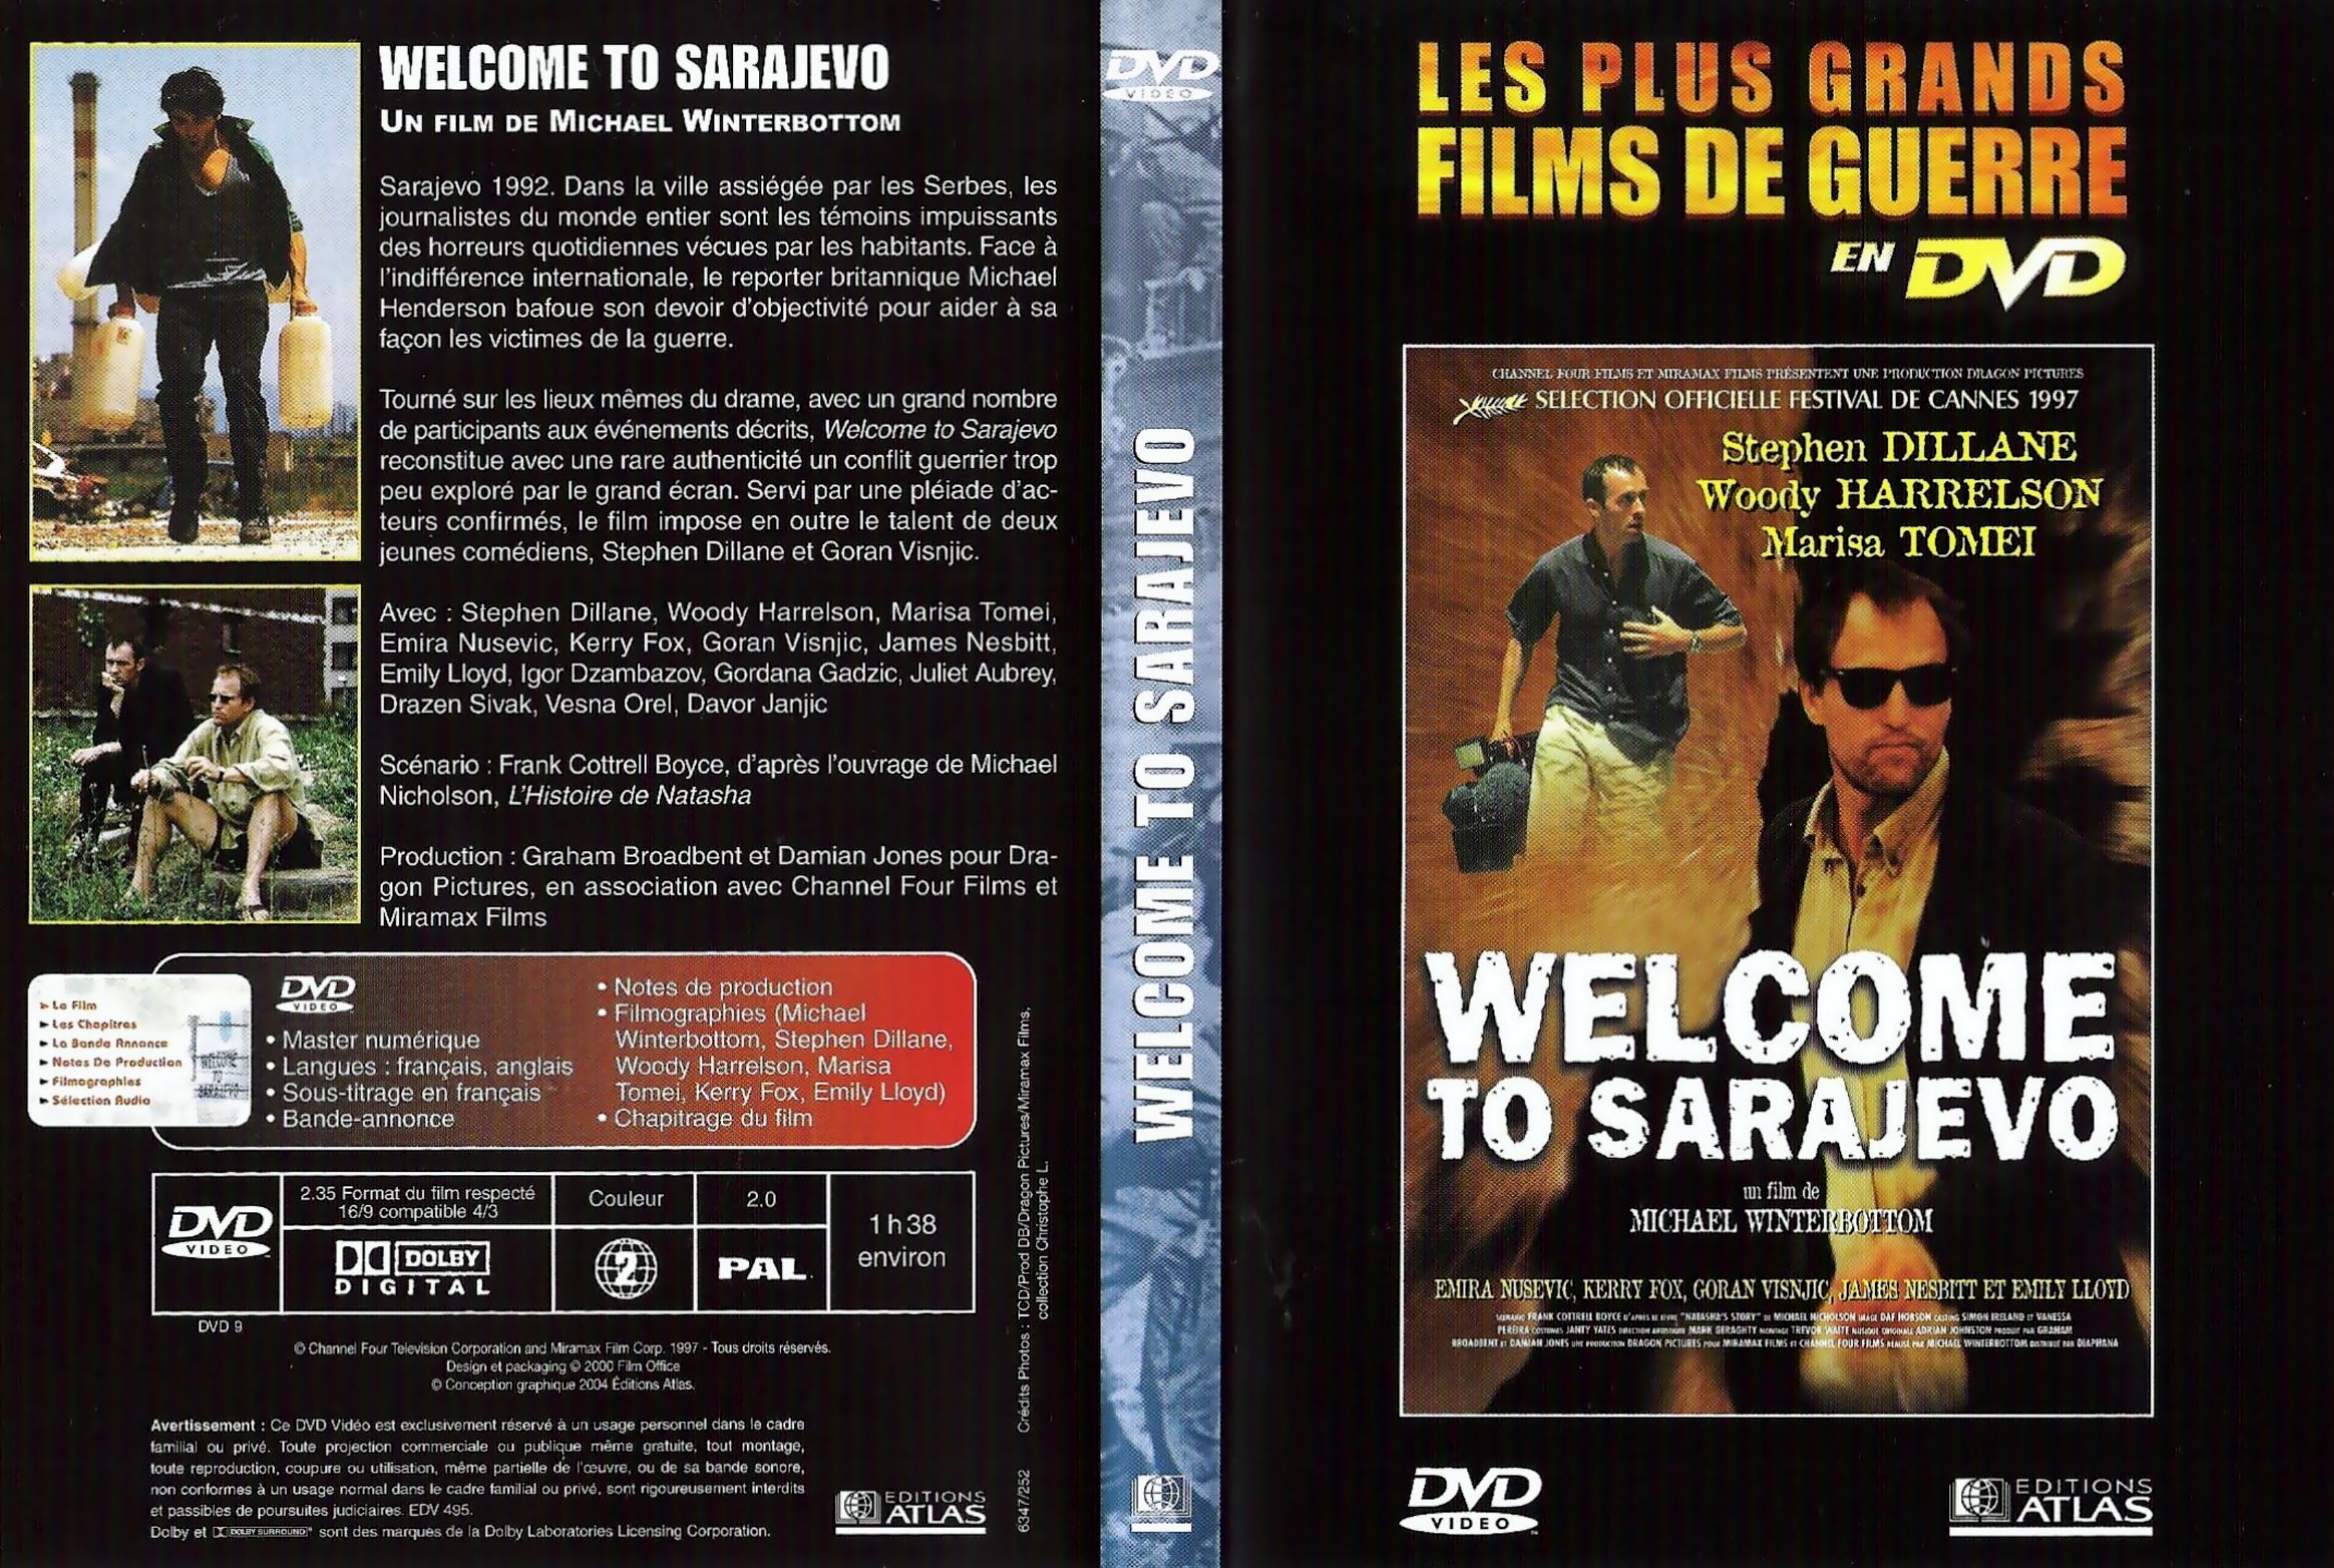 Jaquette DVD Welcome to Sarajevo